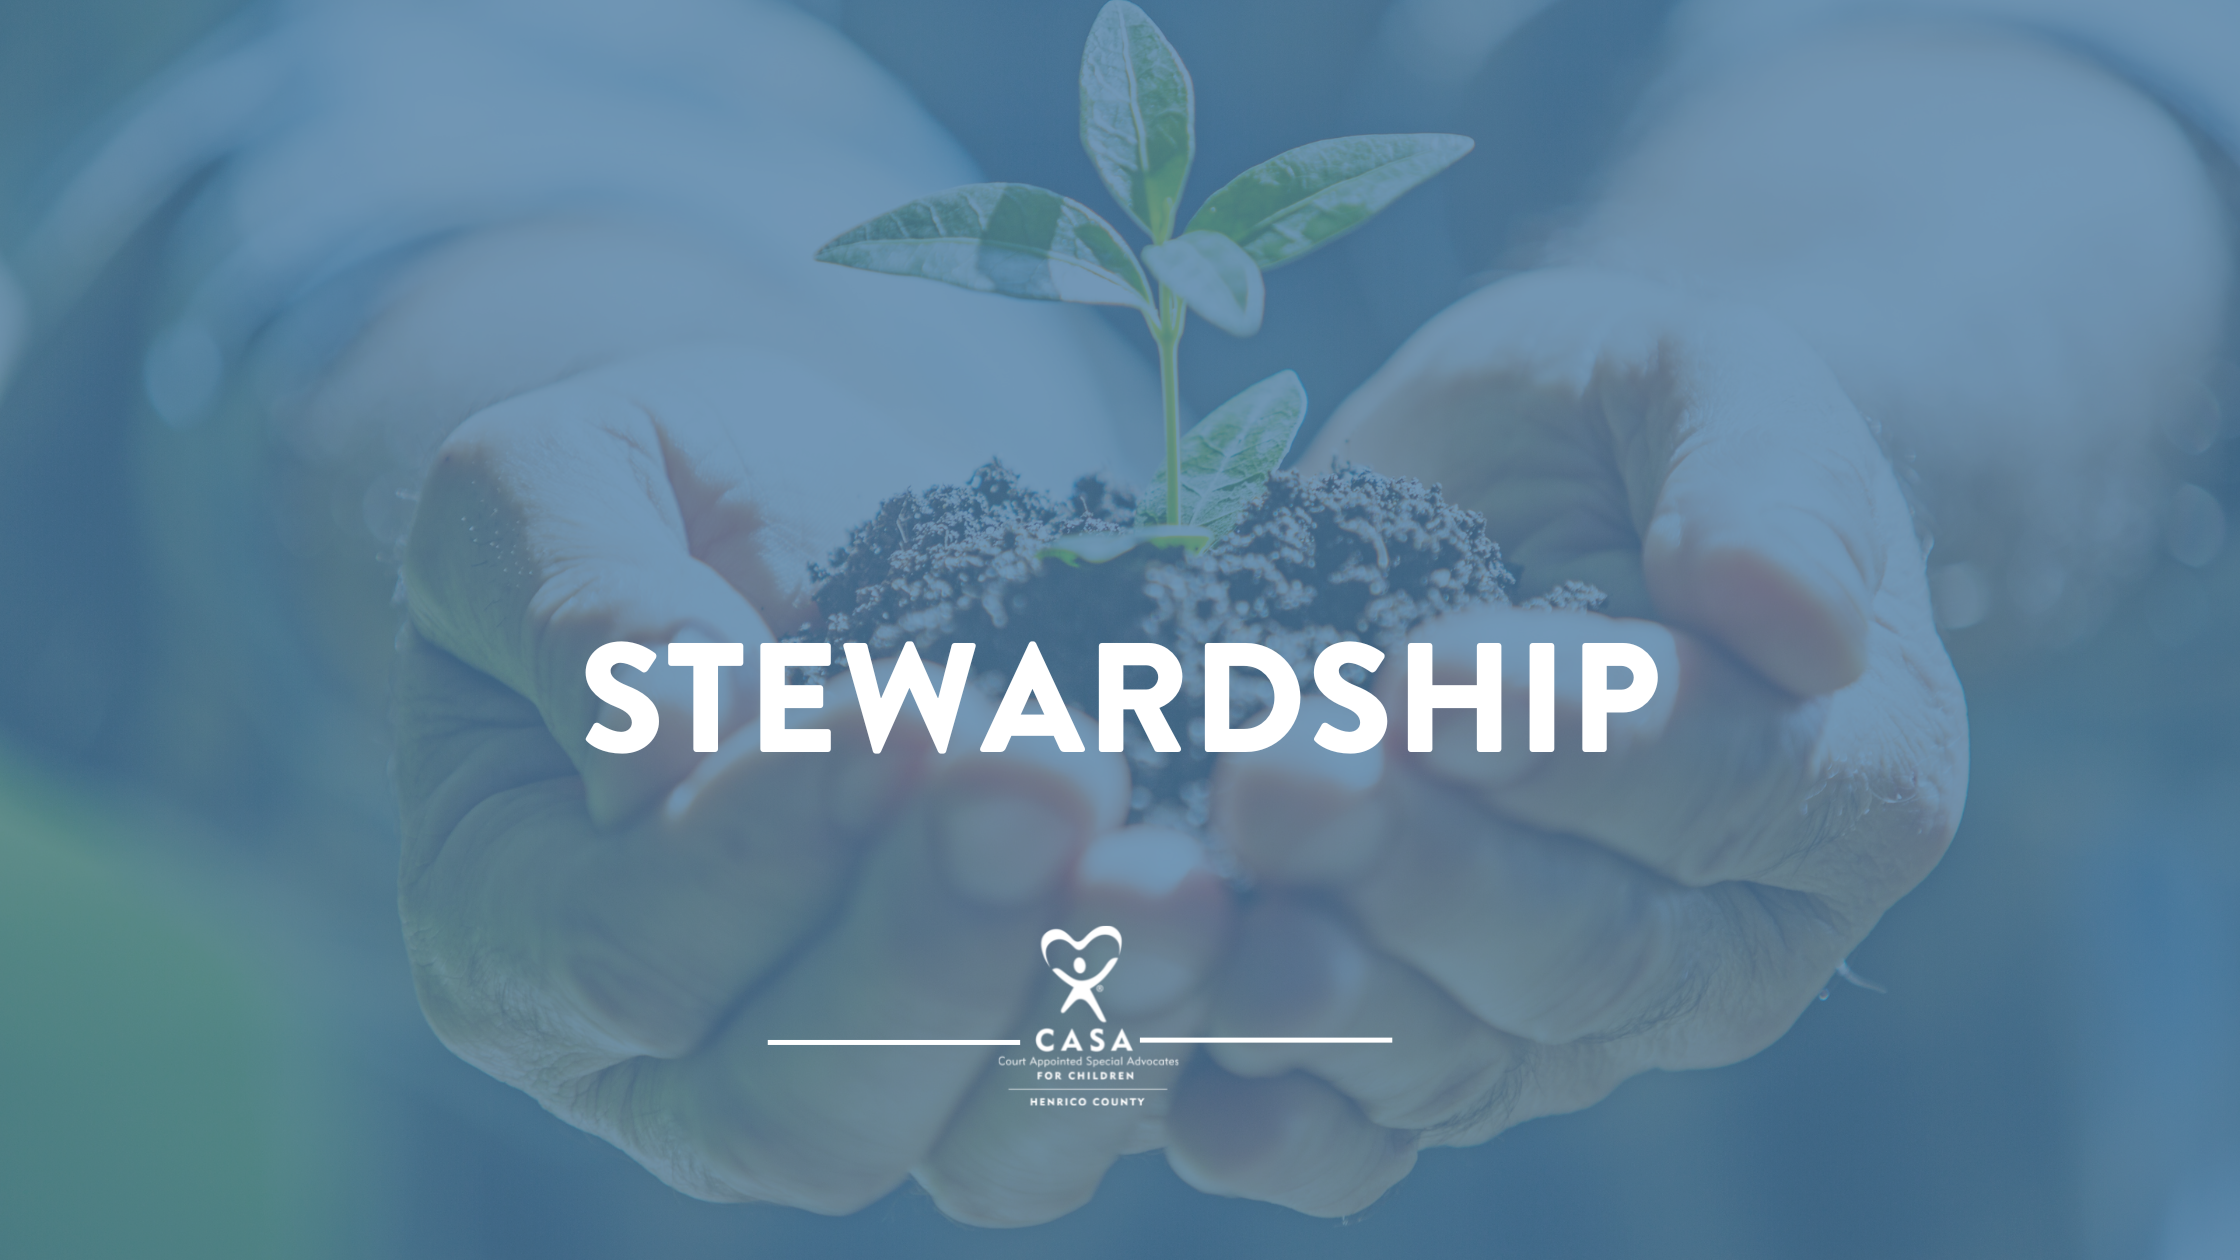 CASA Values: Stewardship